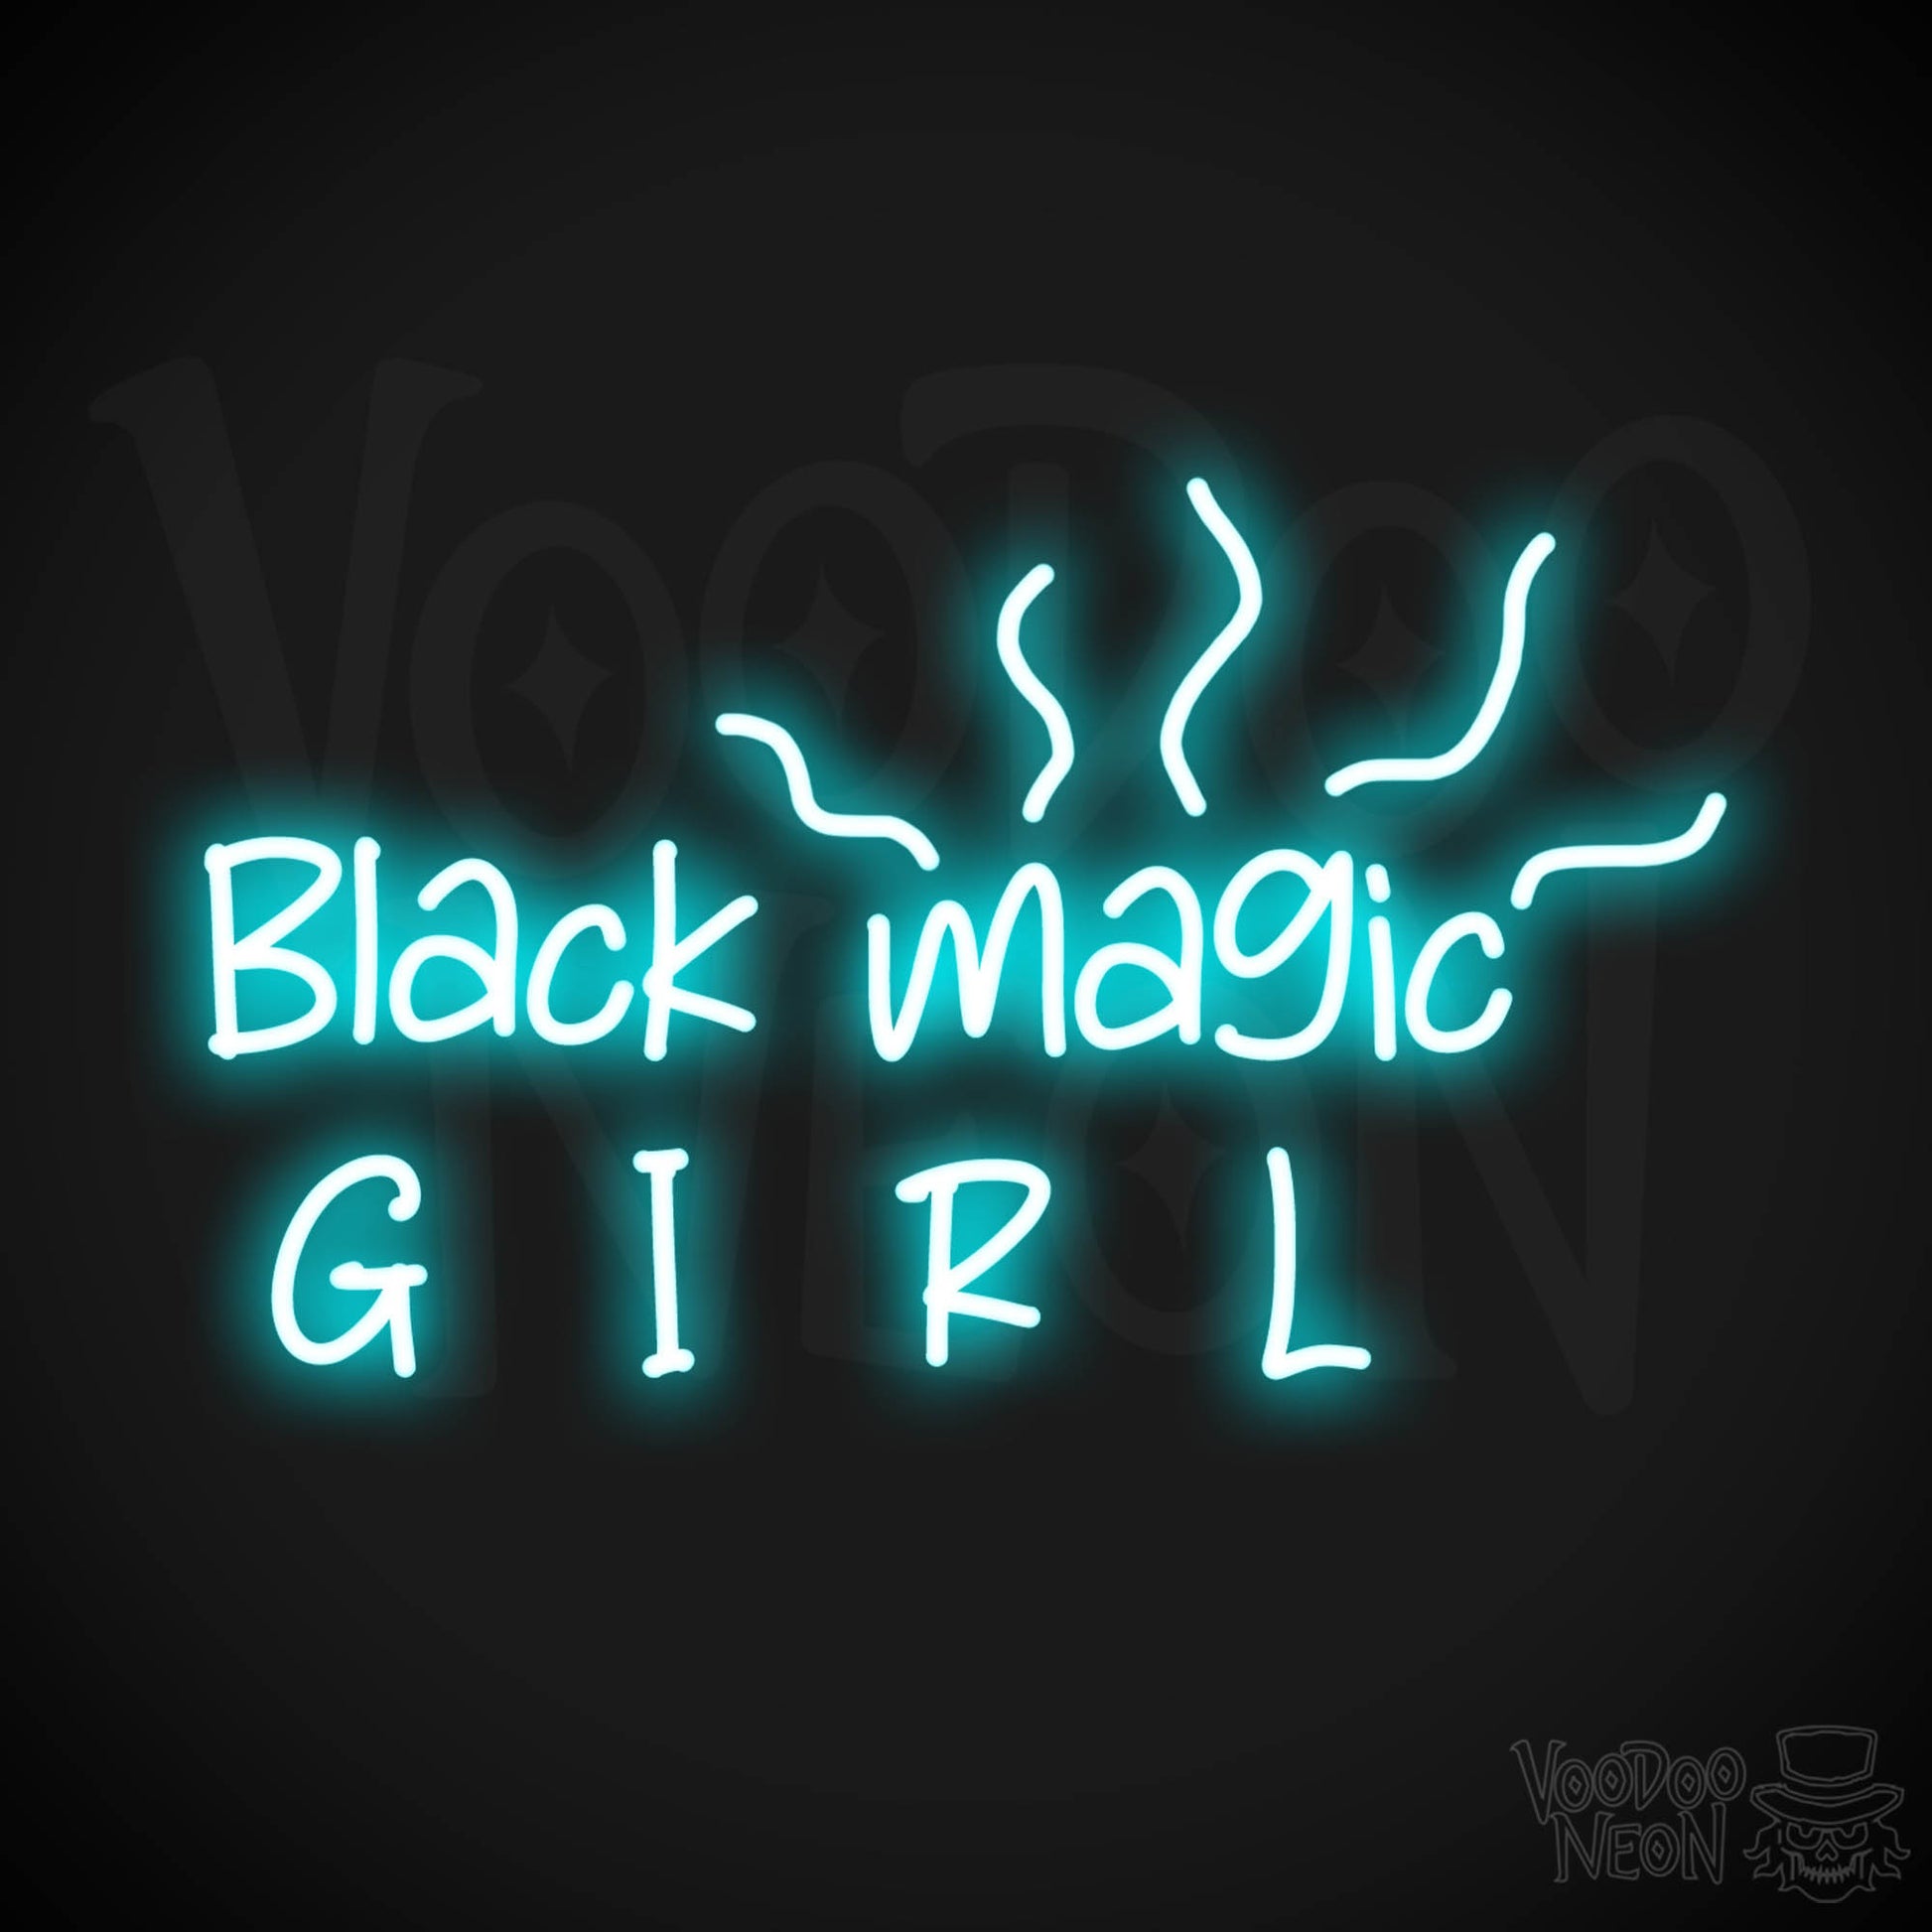 Black Magic Girl LED Neon - Ice Blue